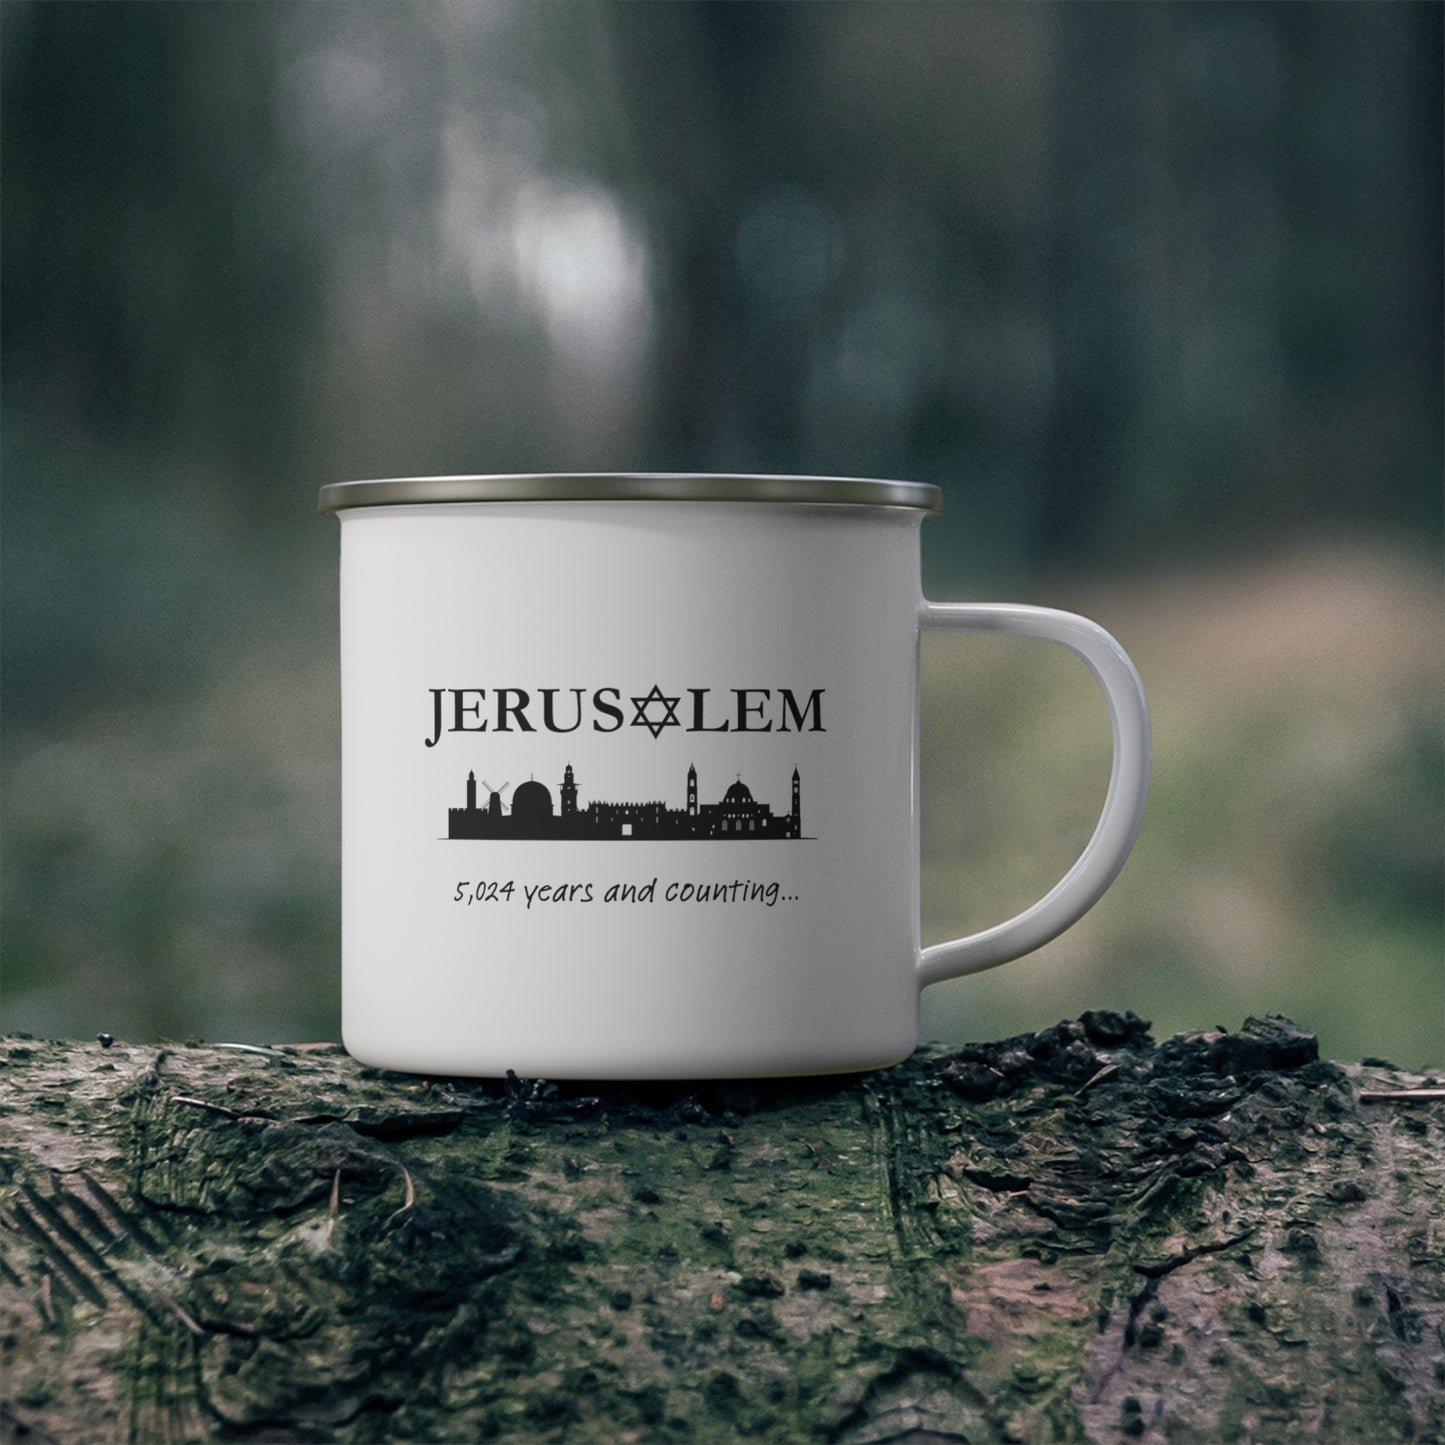 Jerusalem - 5,024 Years and Counting... Enamel Camping Mug